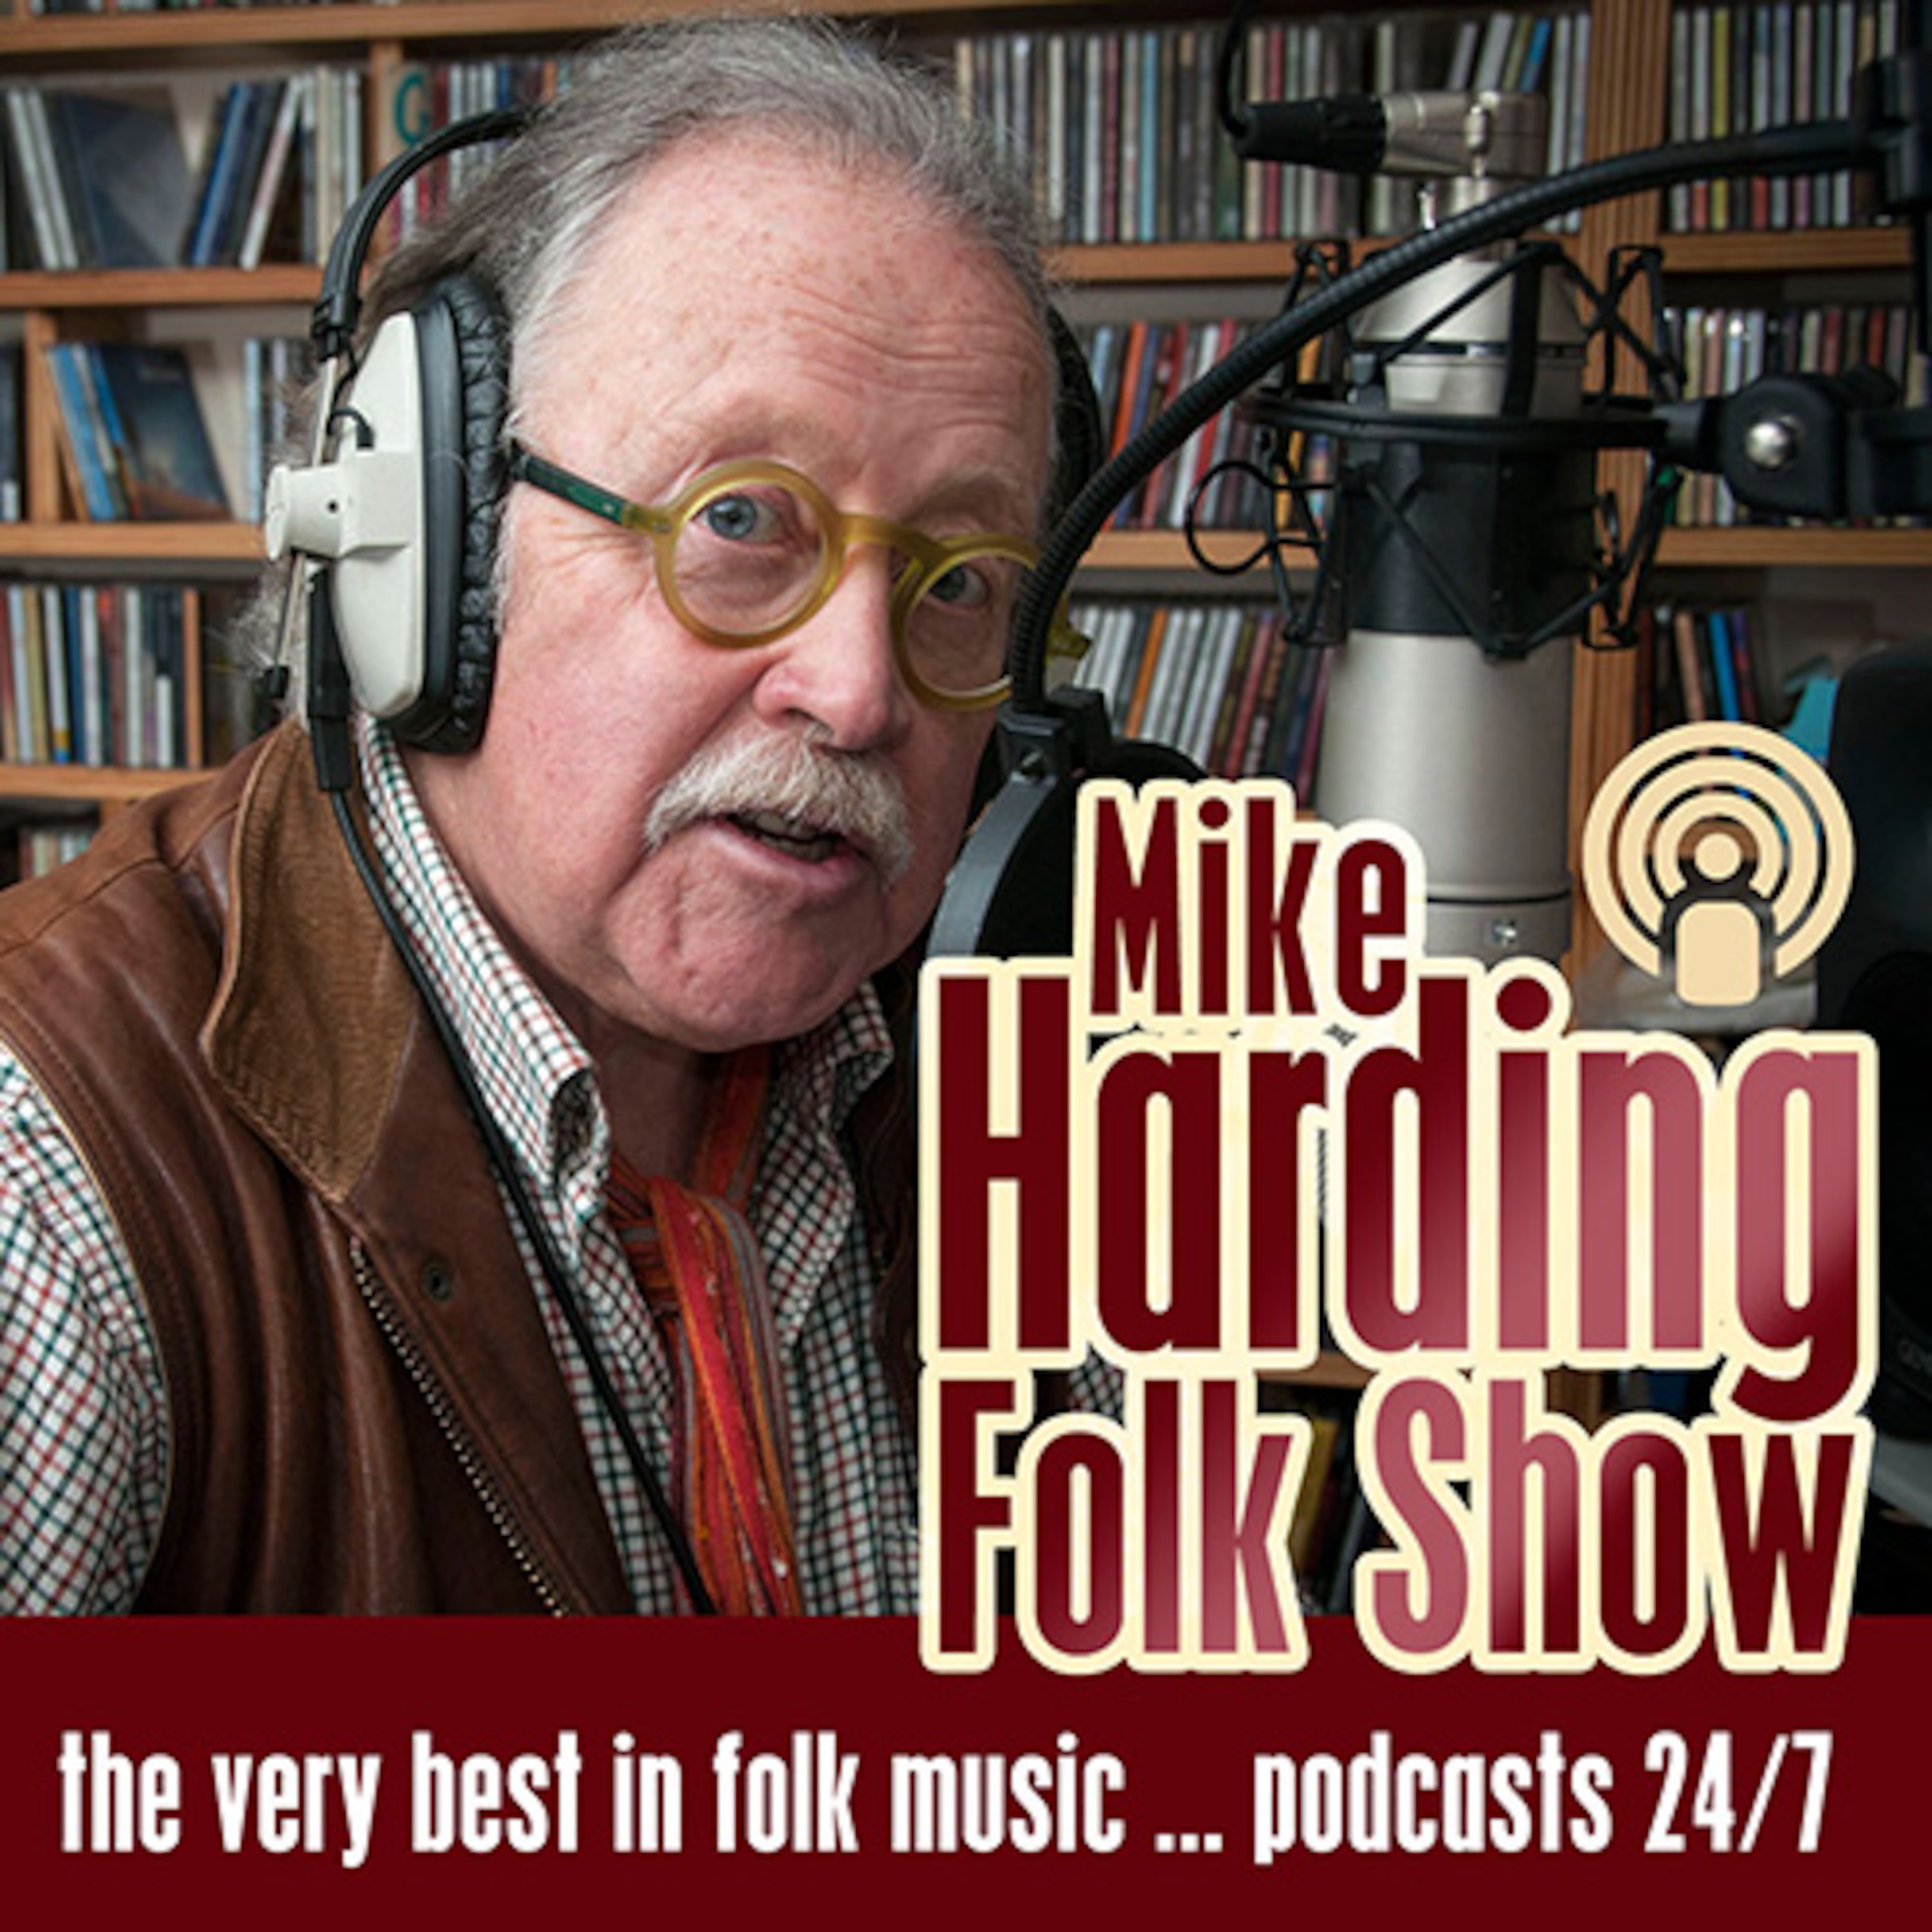 Mike Harding Folk Show 116